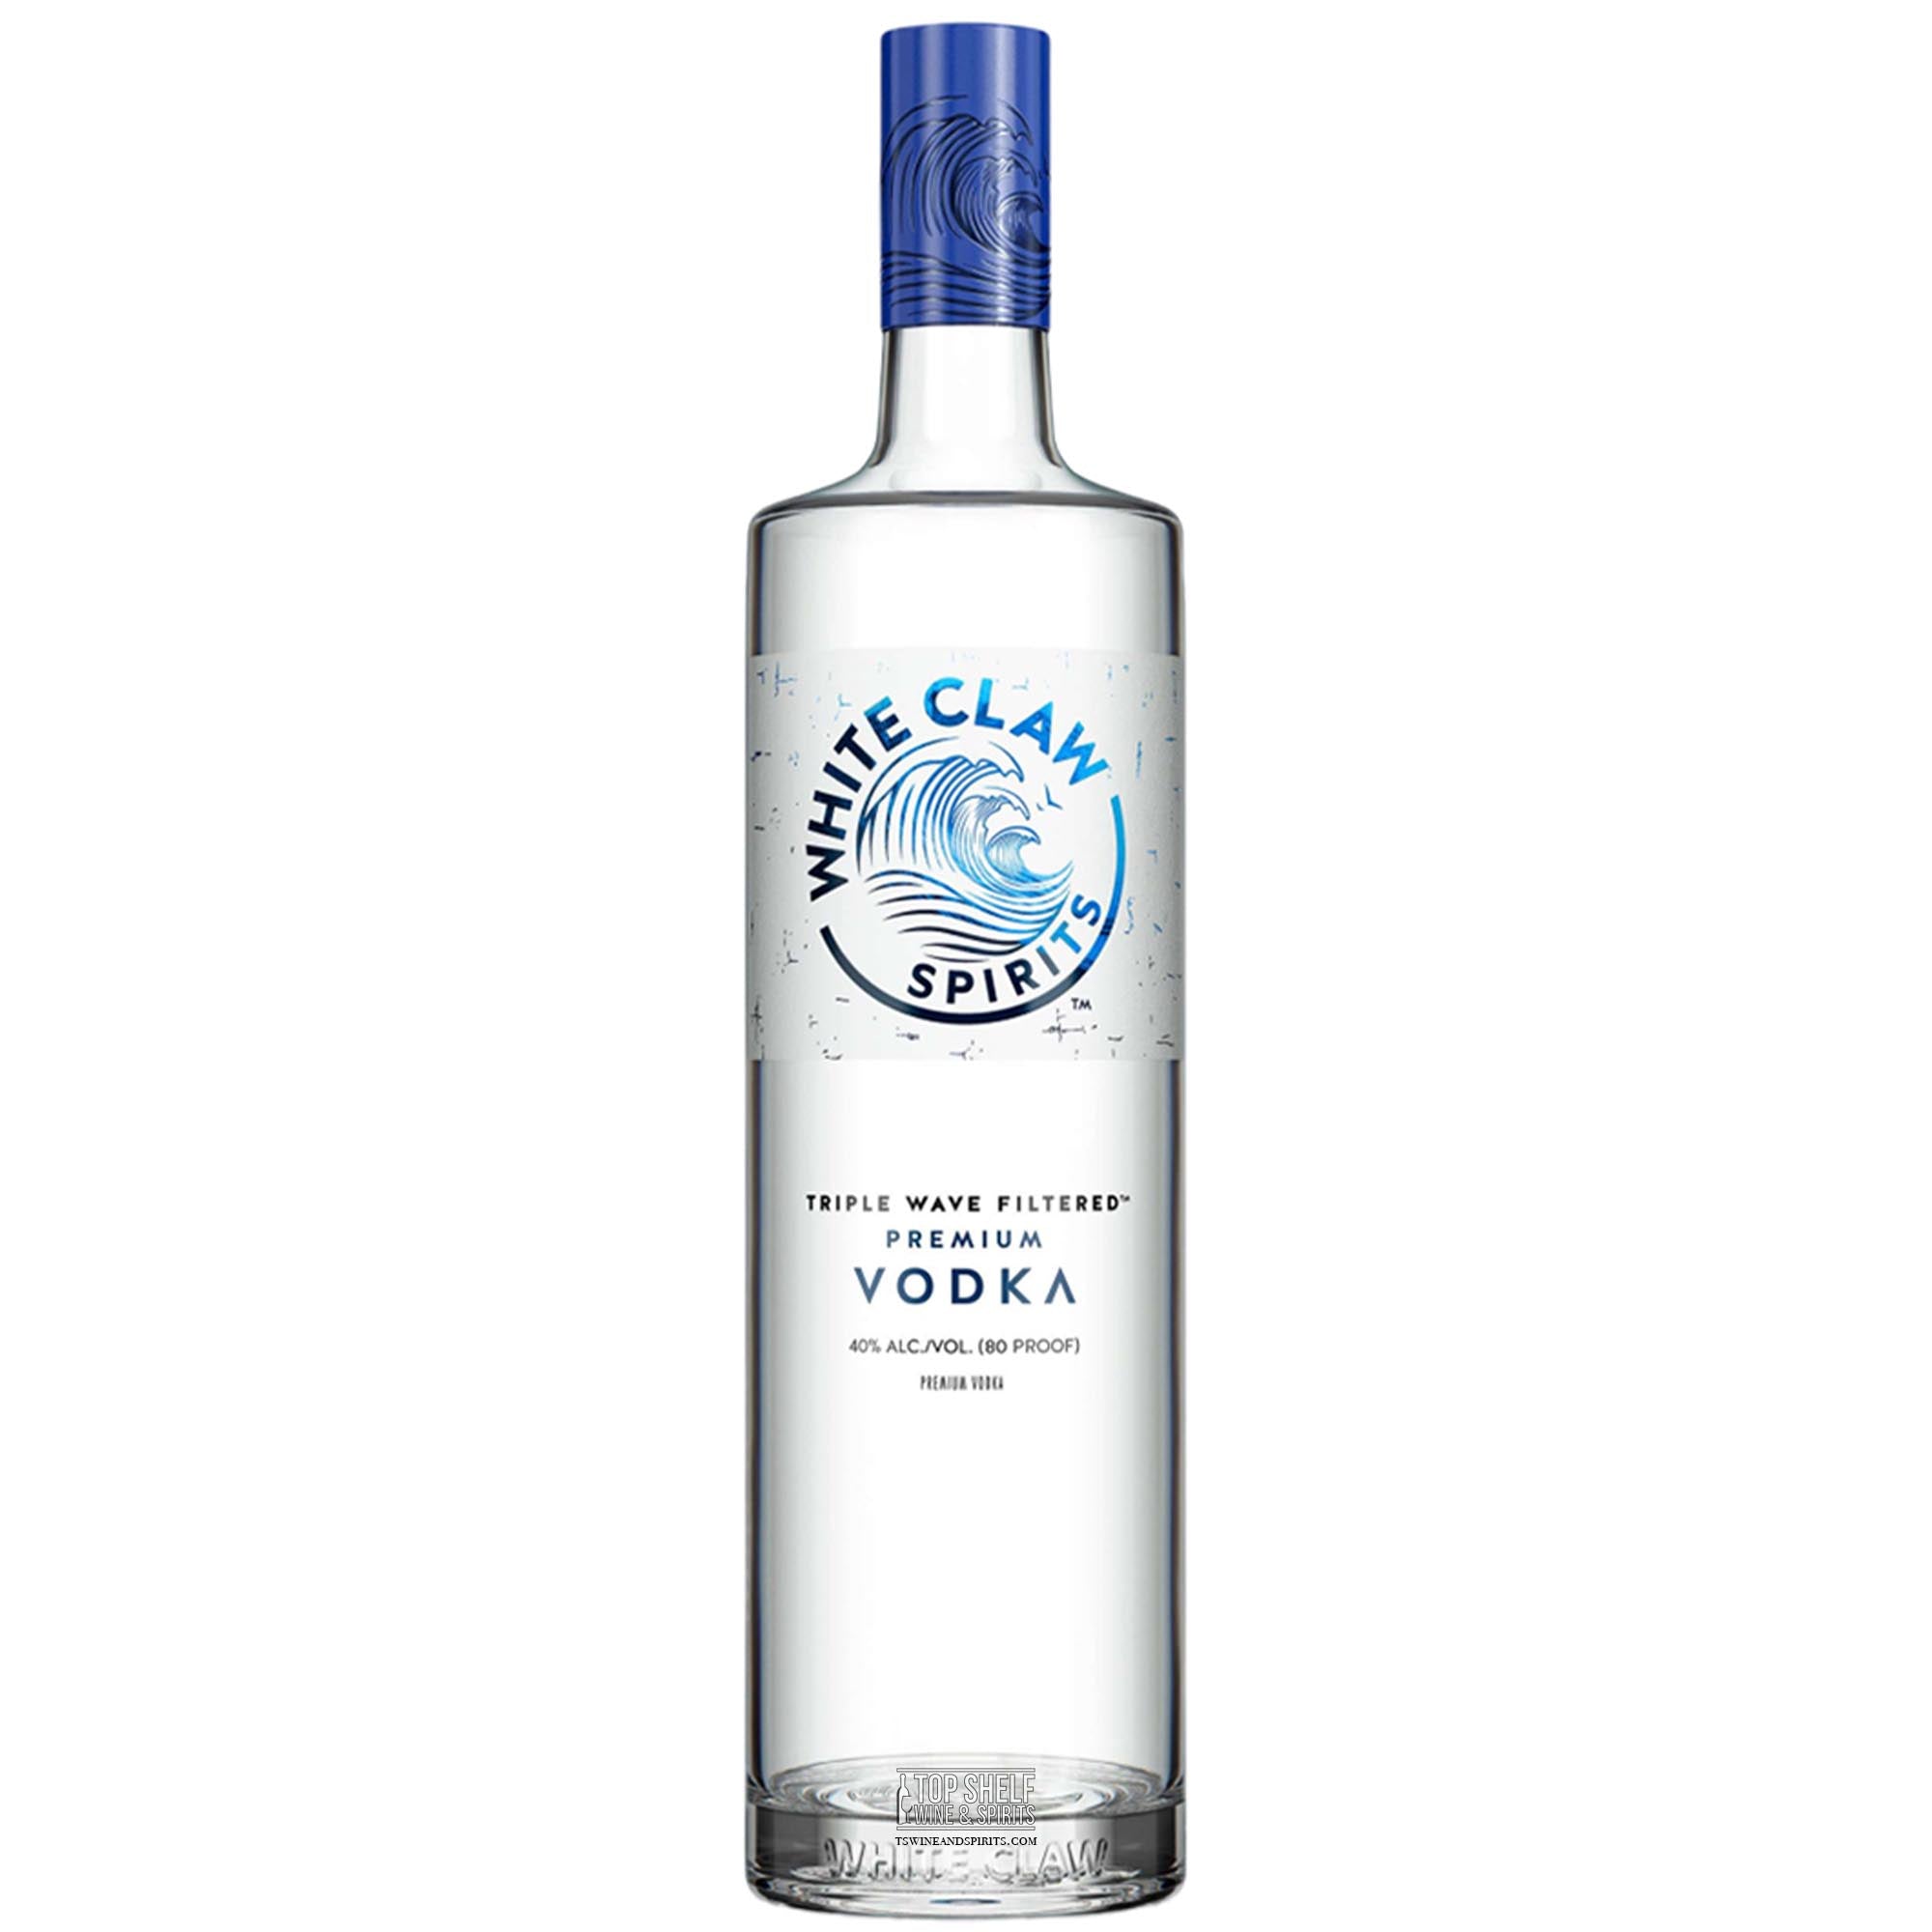 White Claw Original Vodka